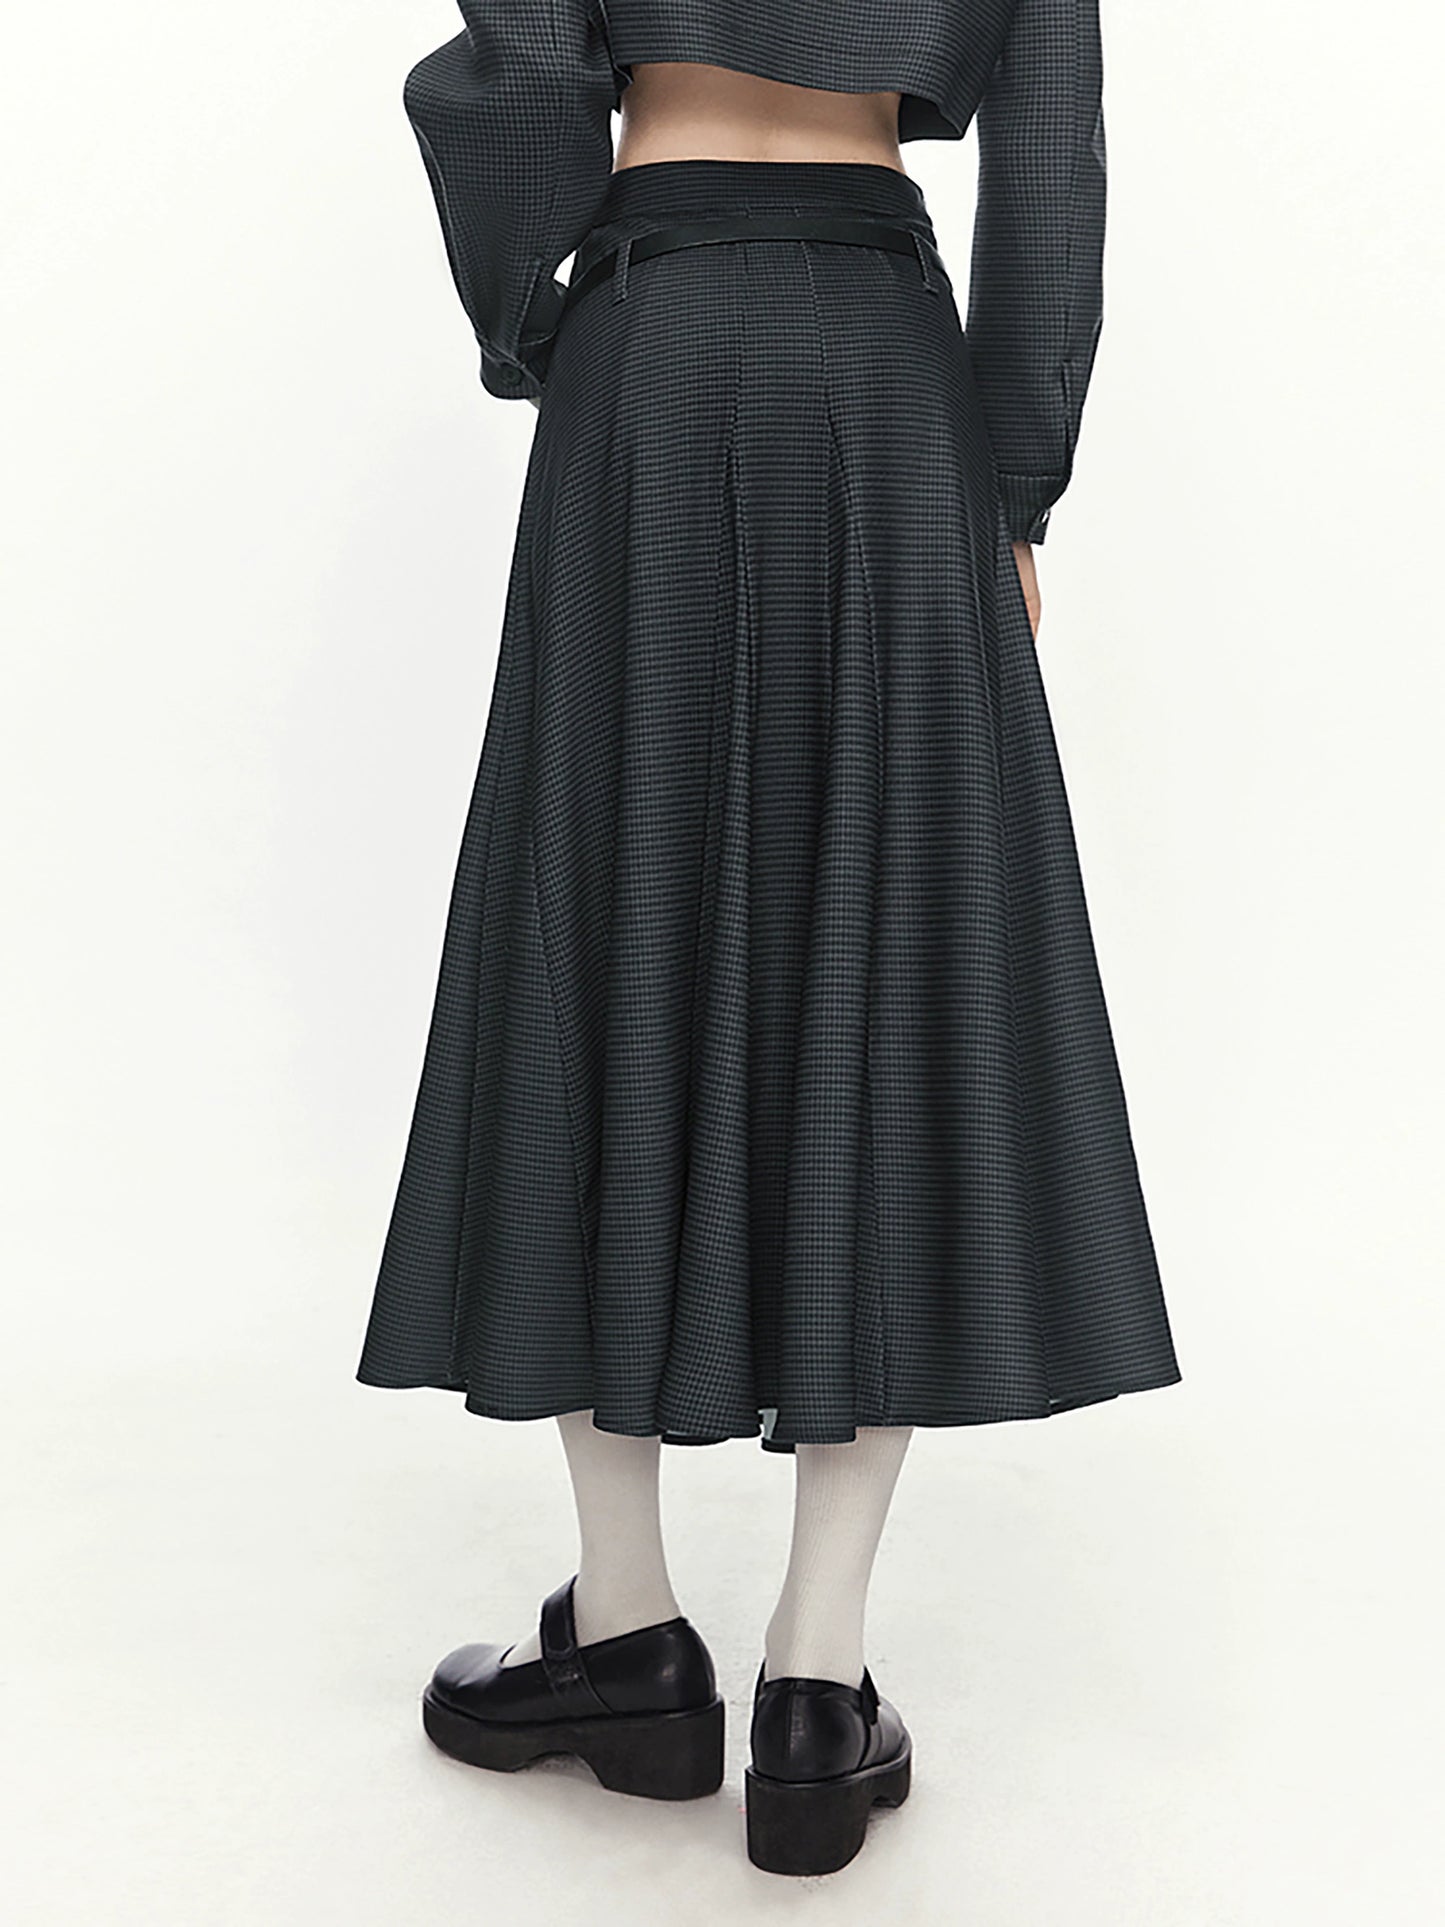 Workwear style midi skirt